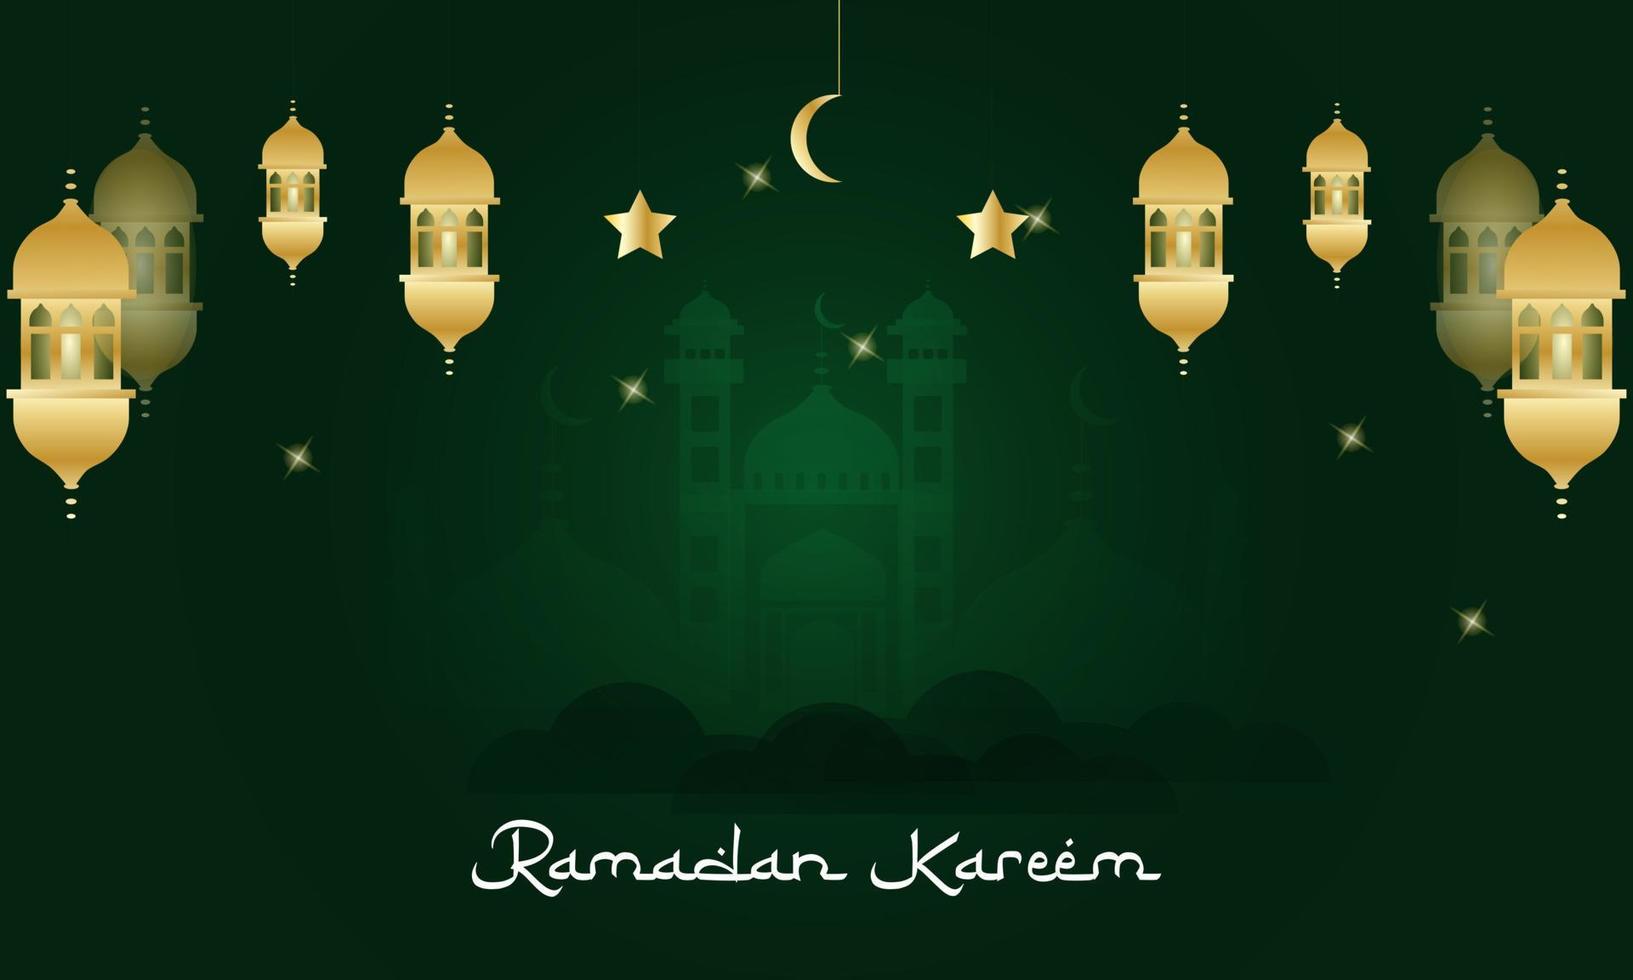 sfondo semplice ed elegante della bandiera del ramadan kareem vettore